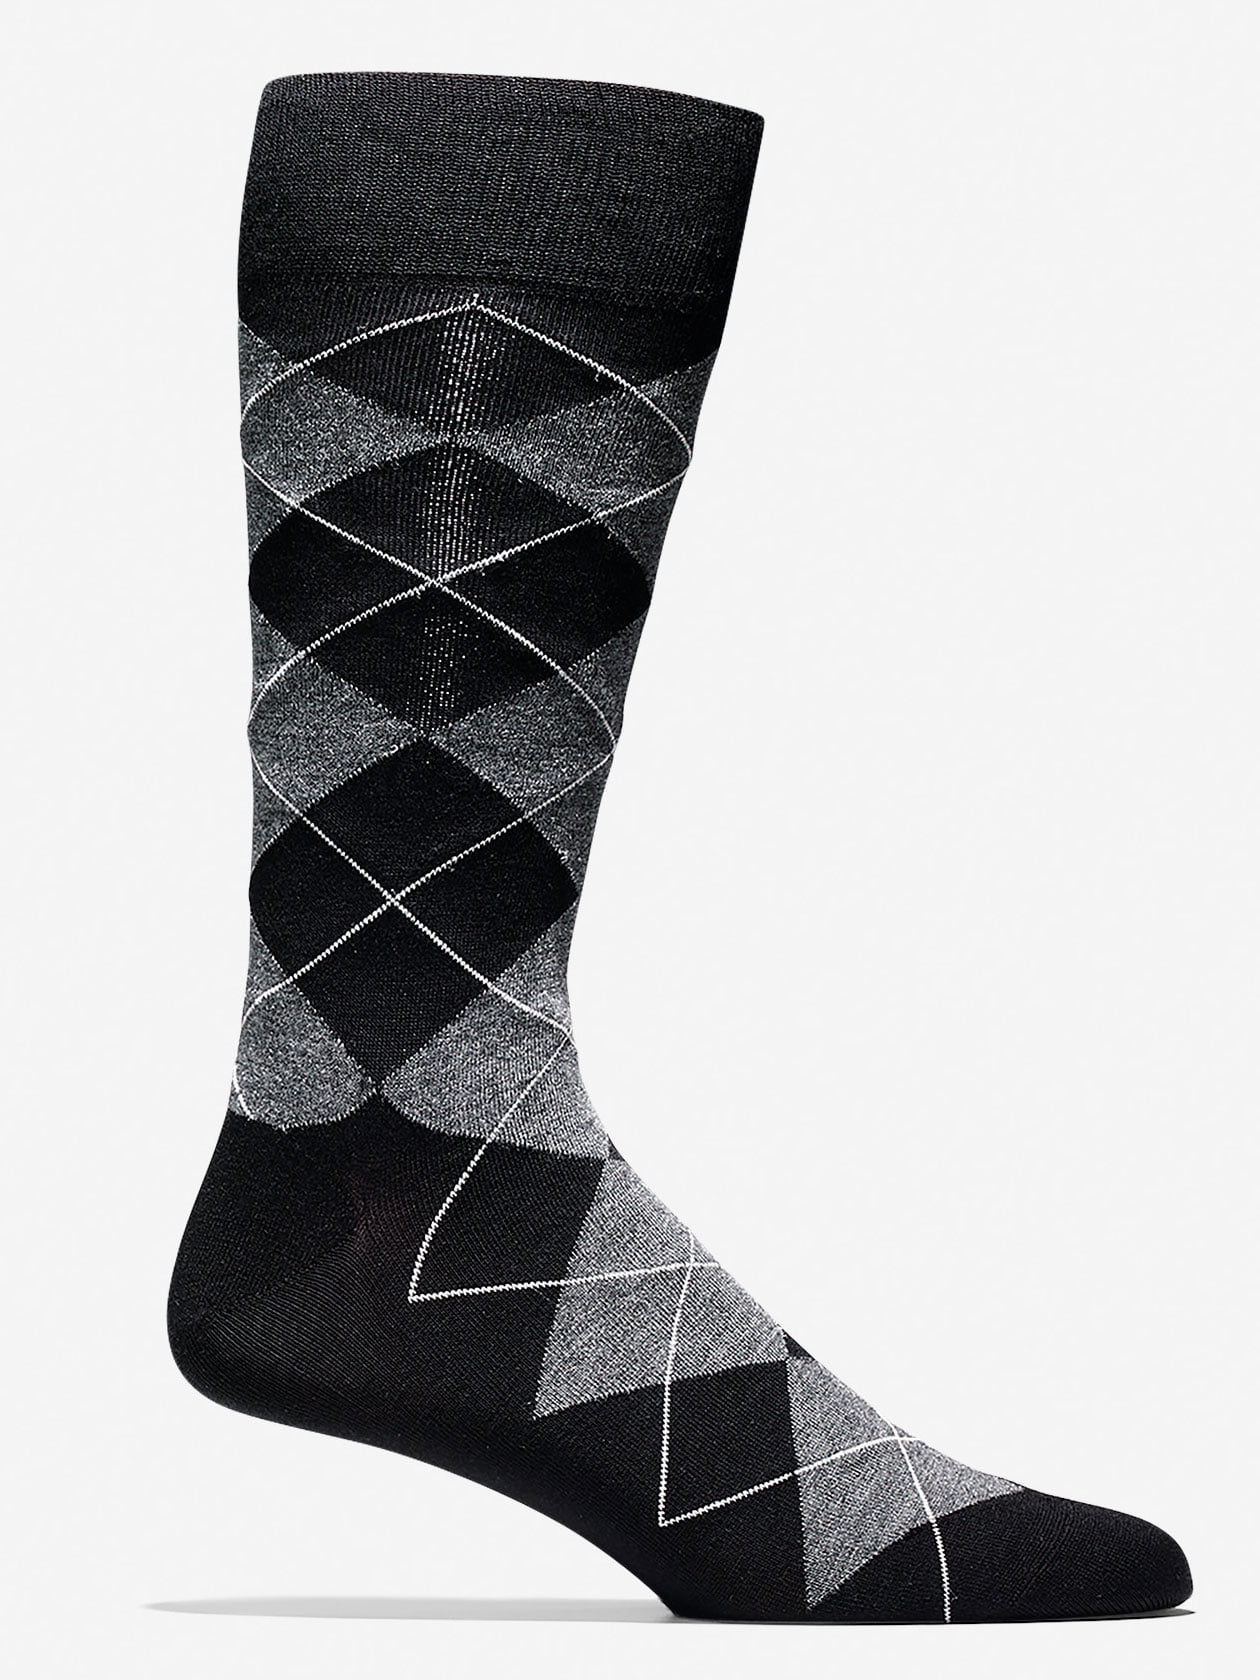 Cole Haan - Cole Haan Men's Classic Argyle Crew Socks, Black, Large ...